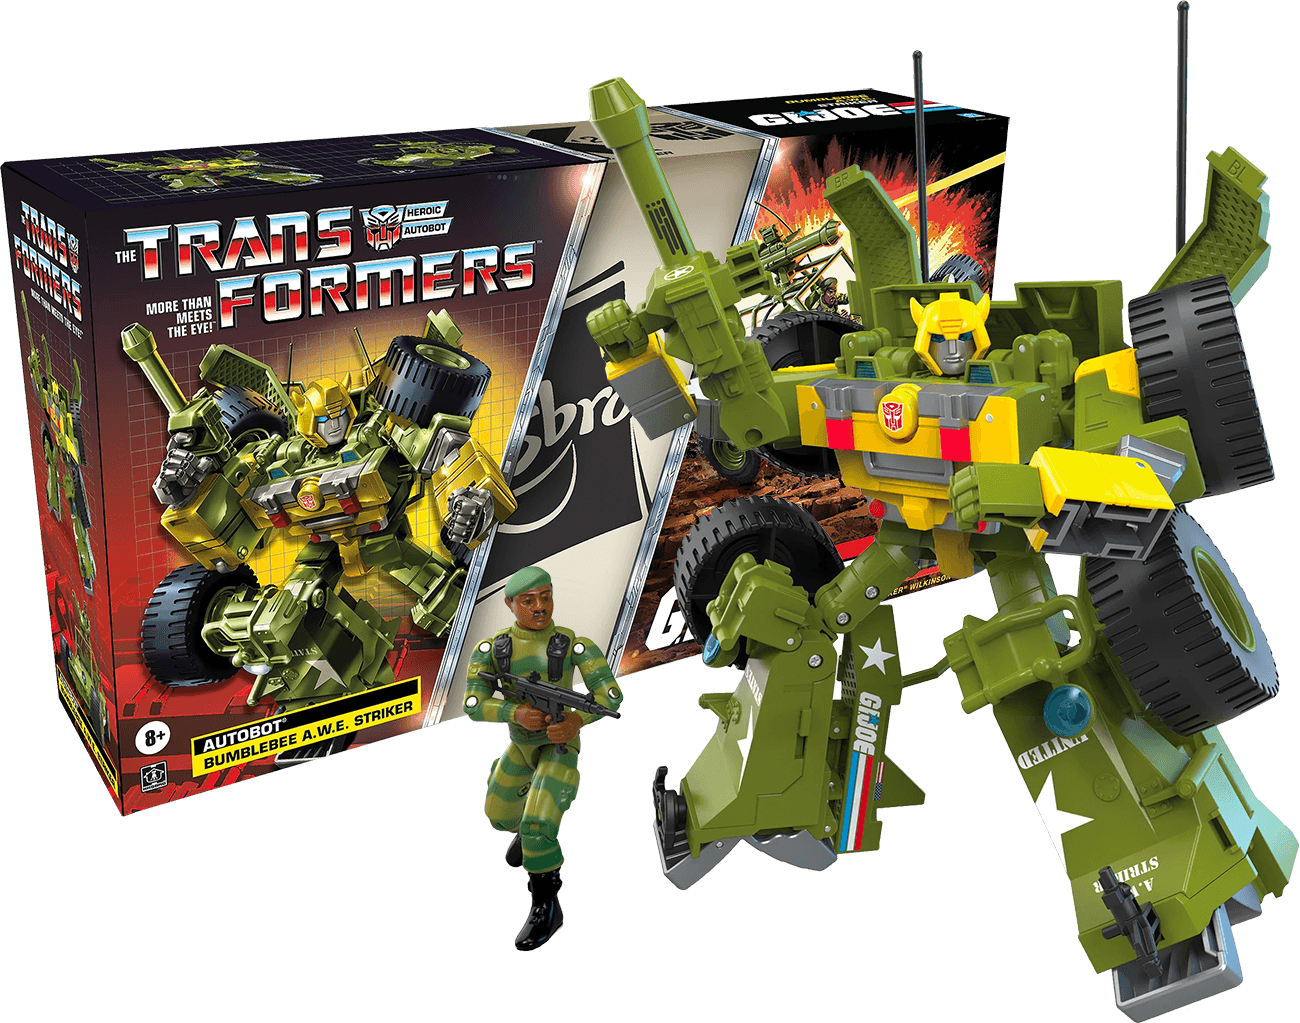 23295 Transformers Collaborative: G.I. Joe Mash-Up, Bumblebee A.W.E. Striker & Lonzo Stalker Wilkinson - Hasbro - Titan Pop Culture